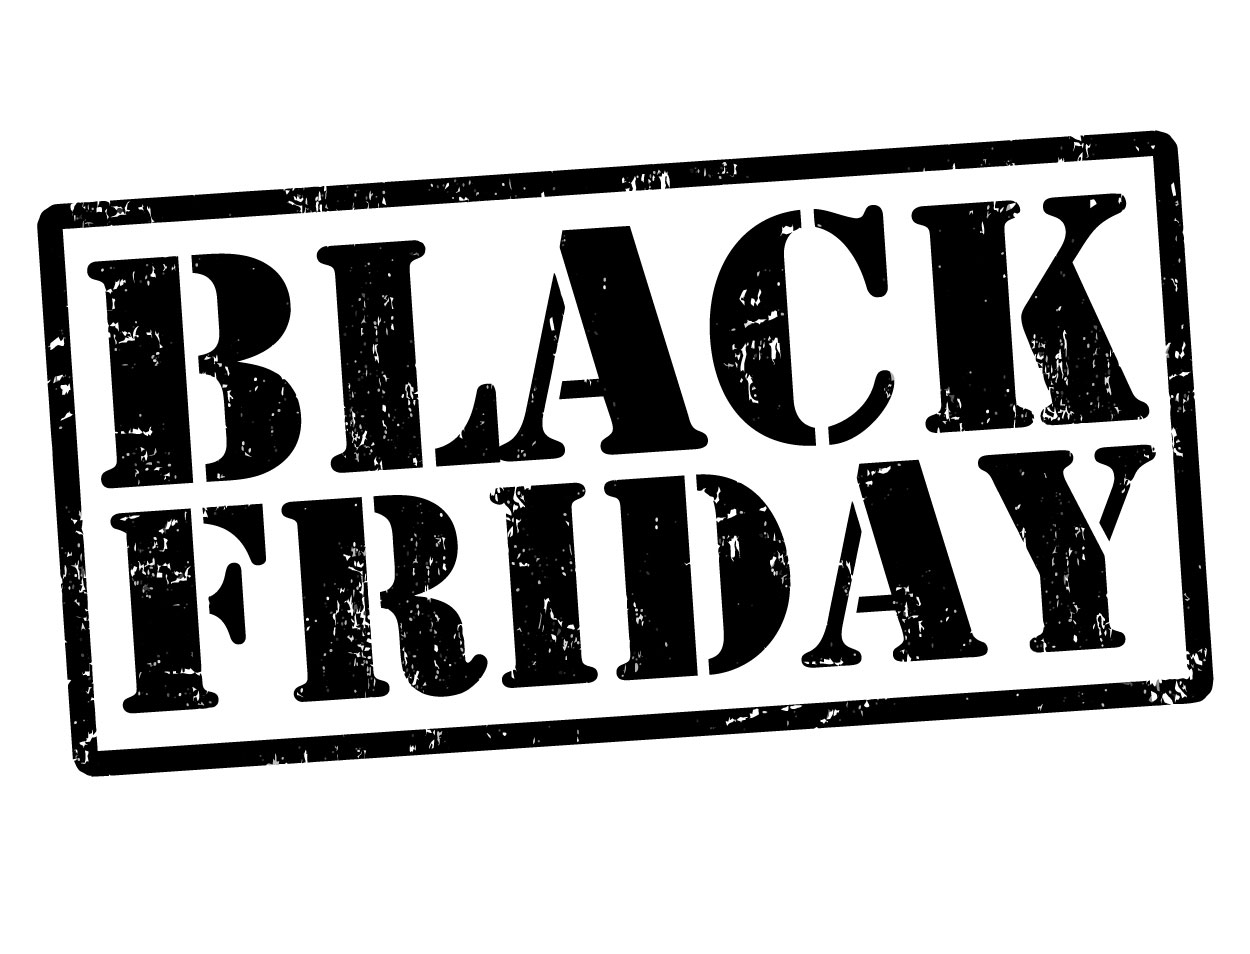 Best Black Friday Deals